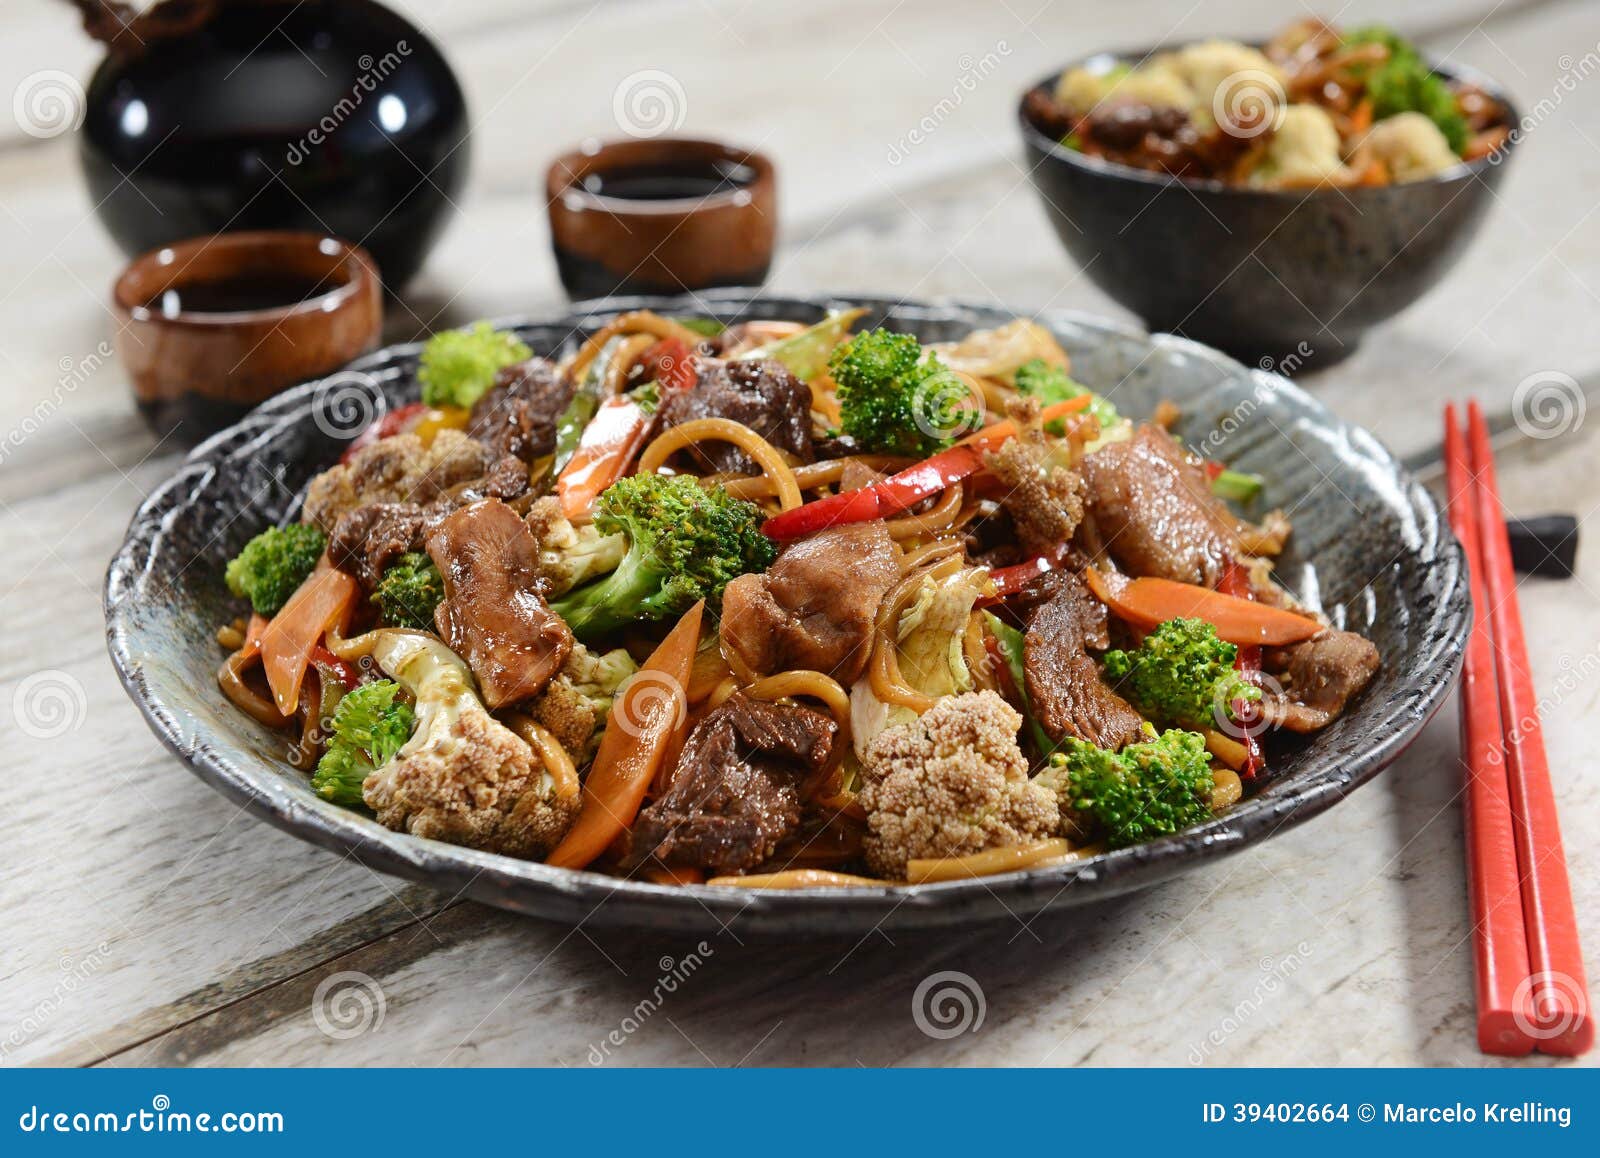 Chinese food - Yakissoba stock photo. Image of view, yakissoba - 39402664